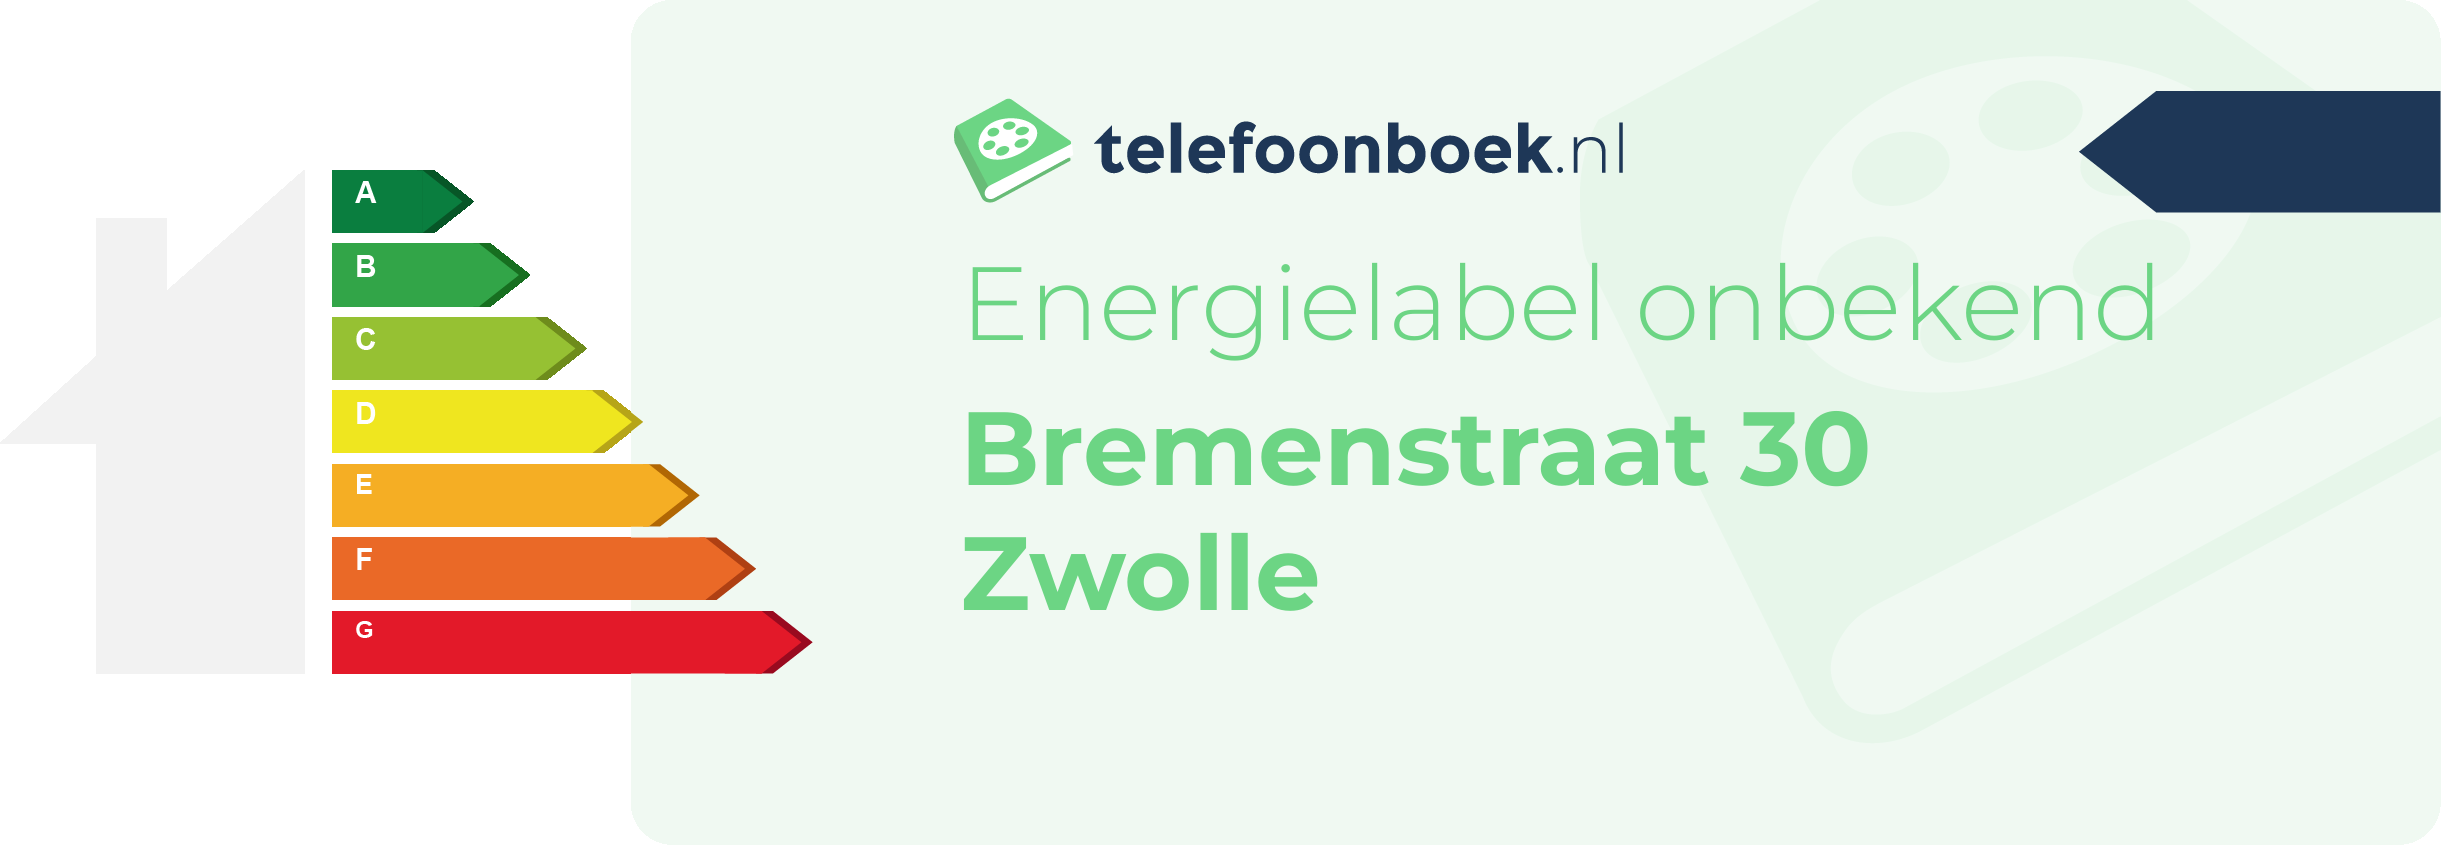 Energielabel Bremenstraat 30 Zwolle